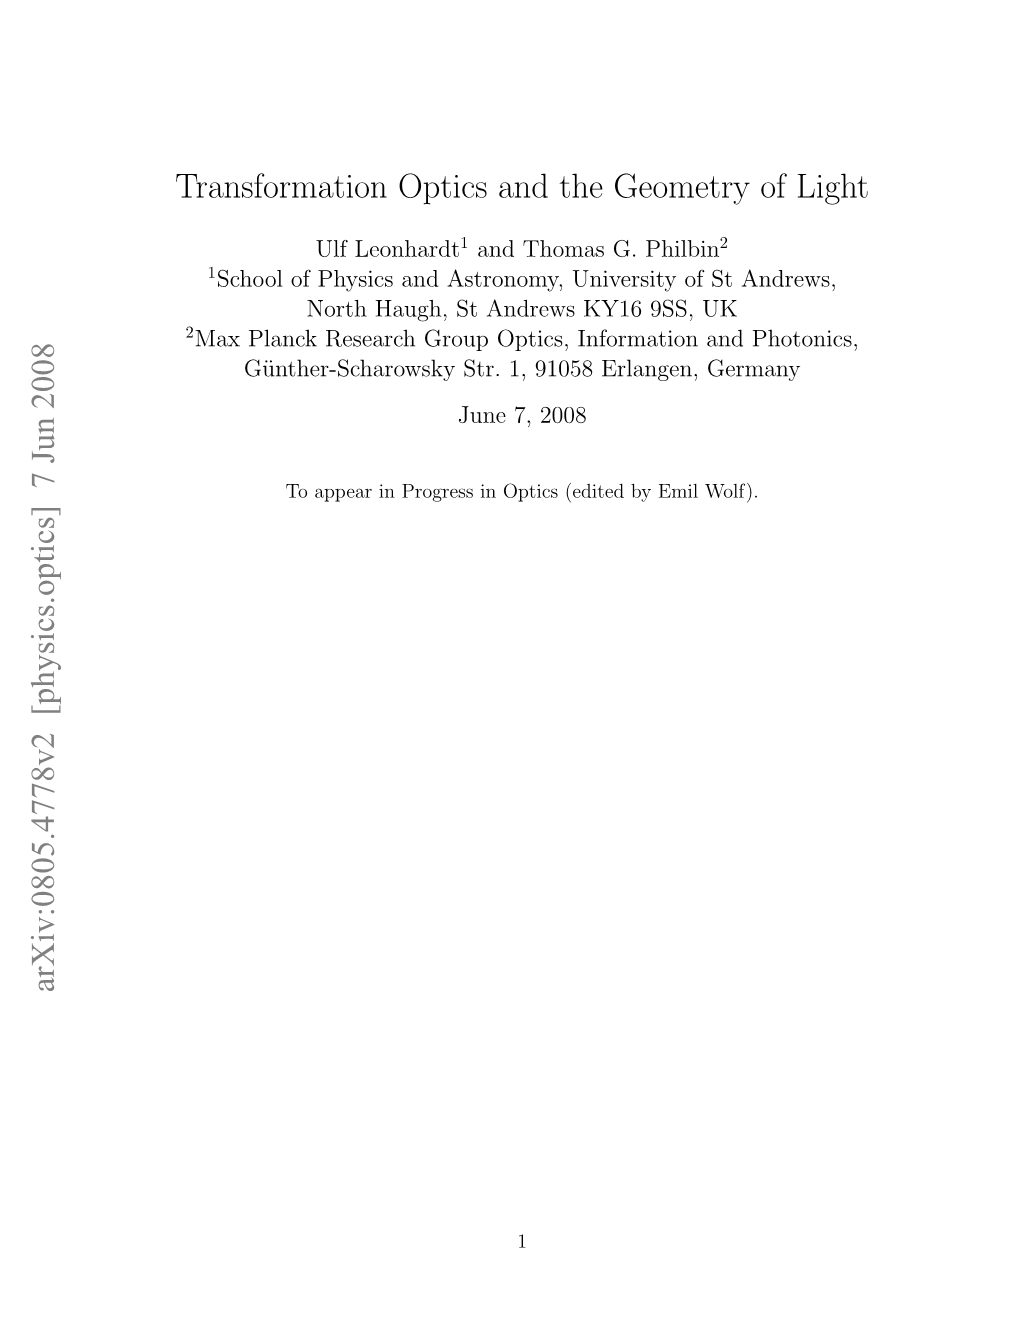 Transformation Optics and the Geometry of Light Arxiv:0805.4778V2